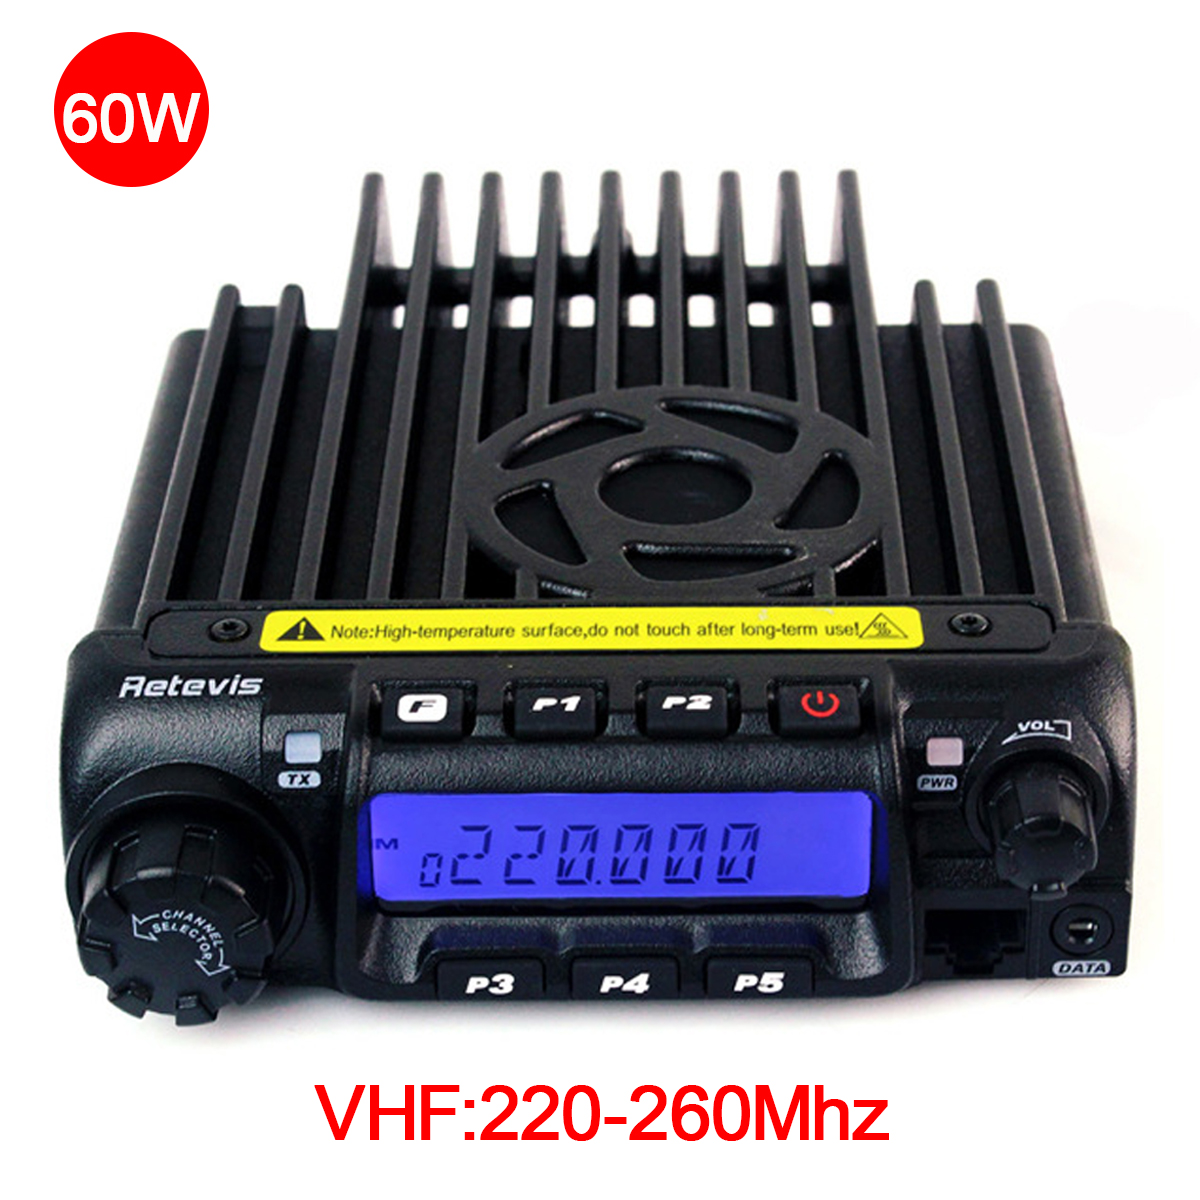 

Retevis RT-9000D Mobiles Auto Radio Digital 60W VHF 220-260MHz Walkie Talkie MIC